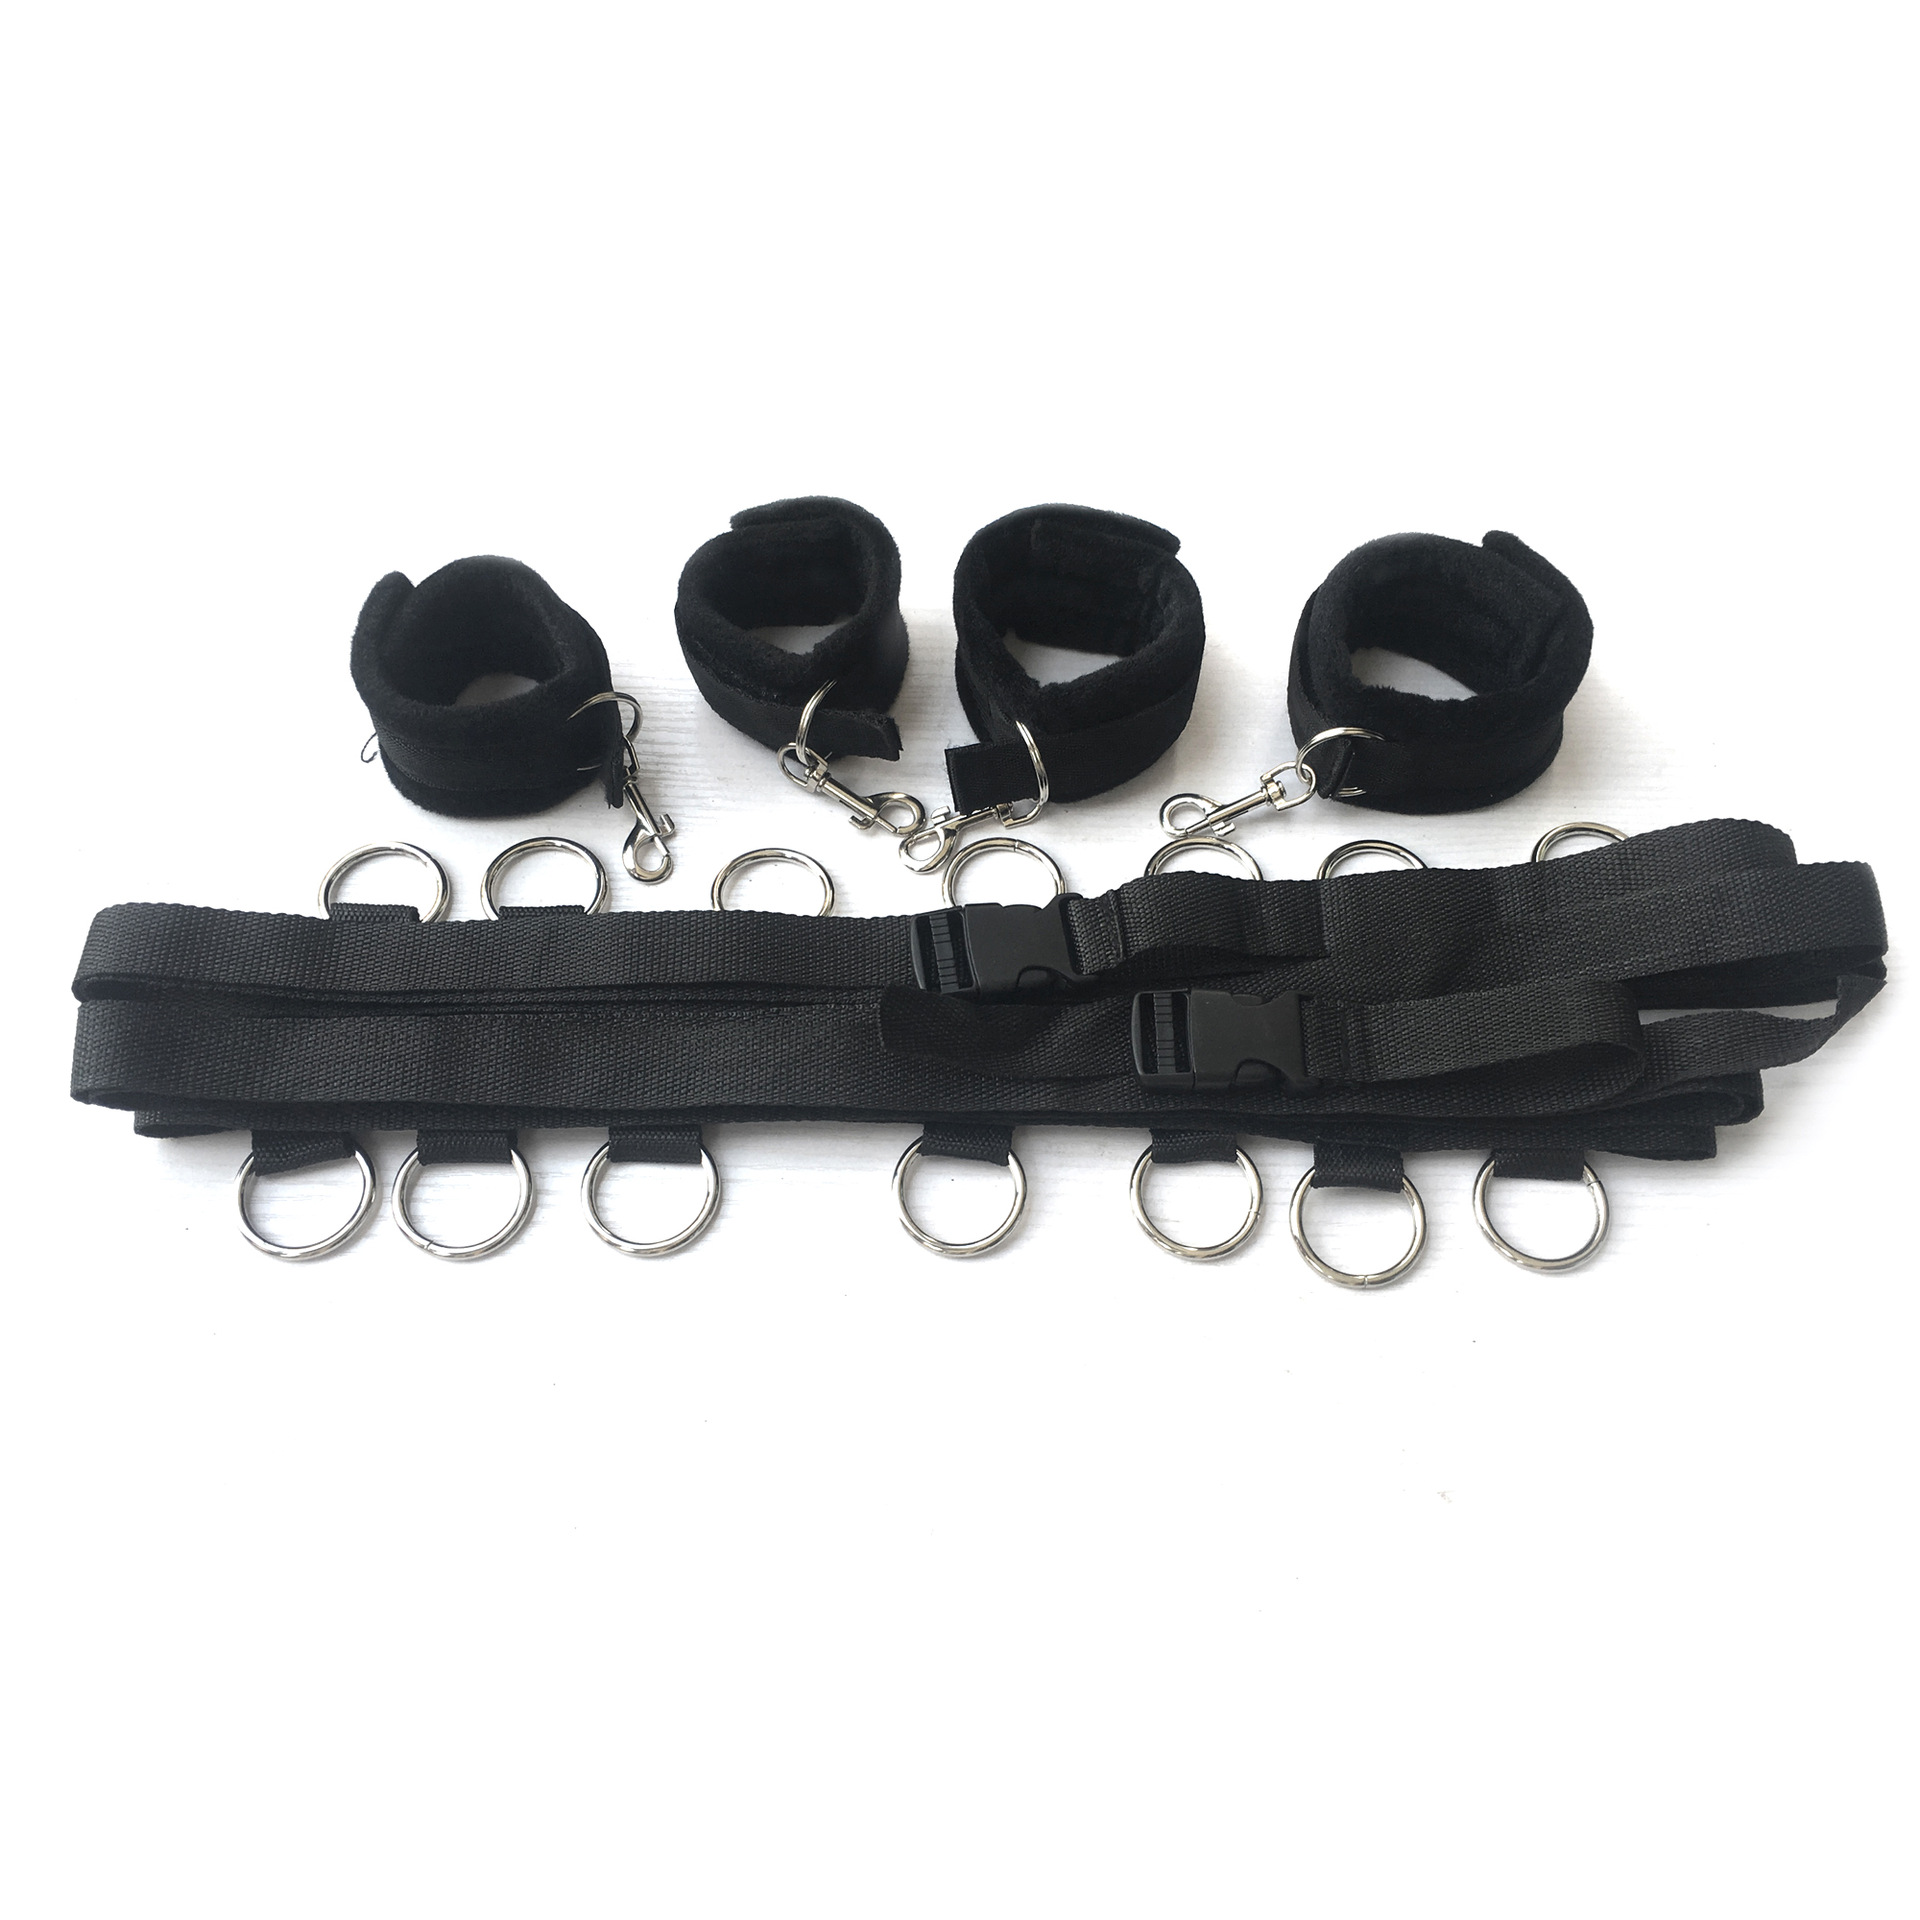 Kit Fetish BDSM ataduras y accesorios de 10 piezas – Dulce Placer, kit bdsm